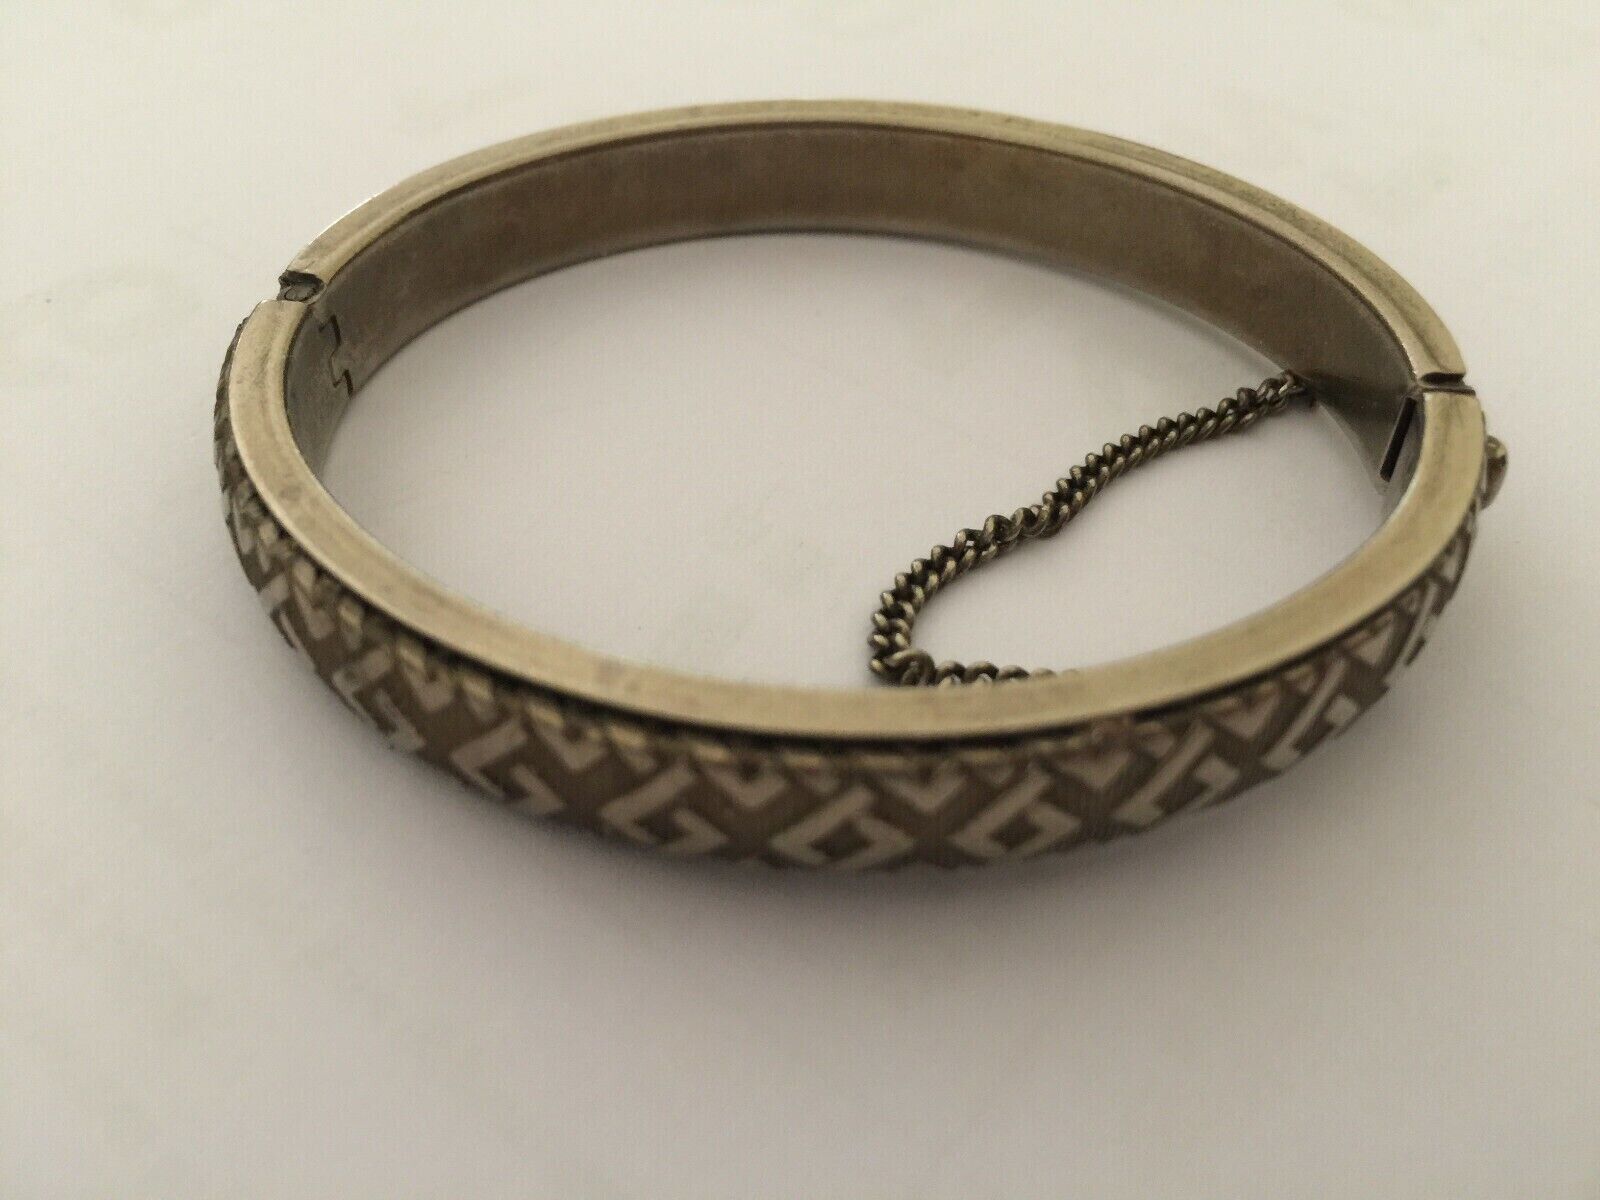 Vintage 1970s engraved grid Silver Bracelet with clasp